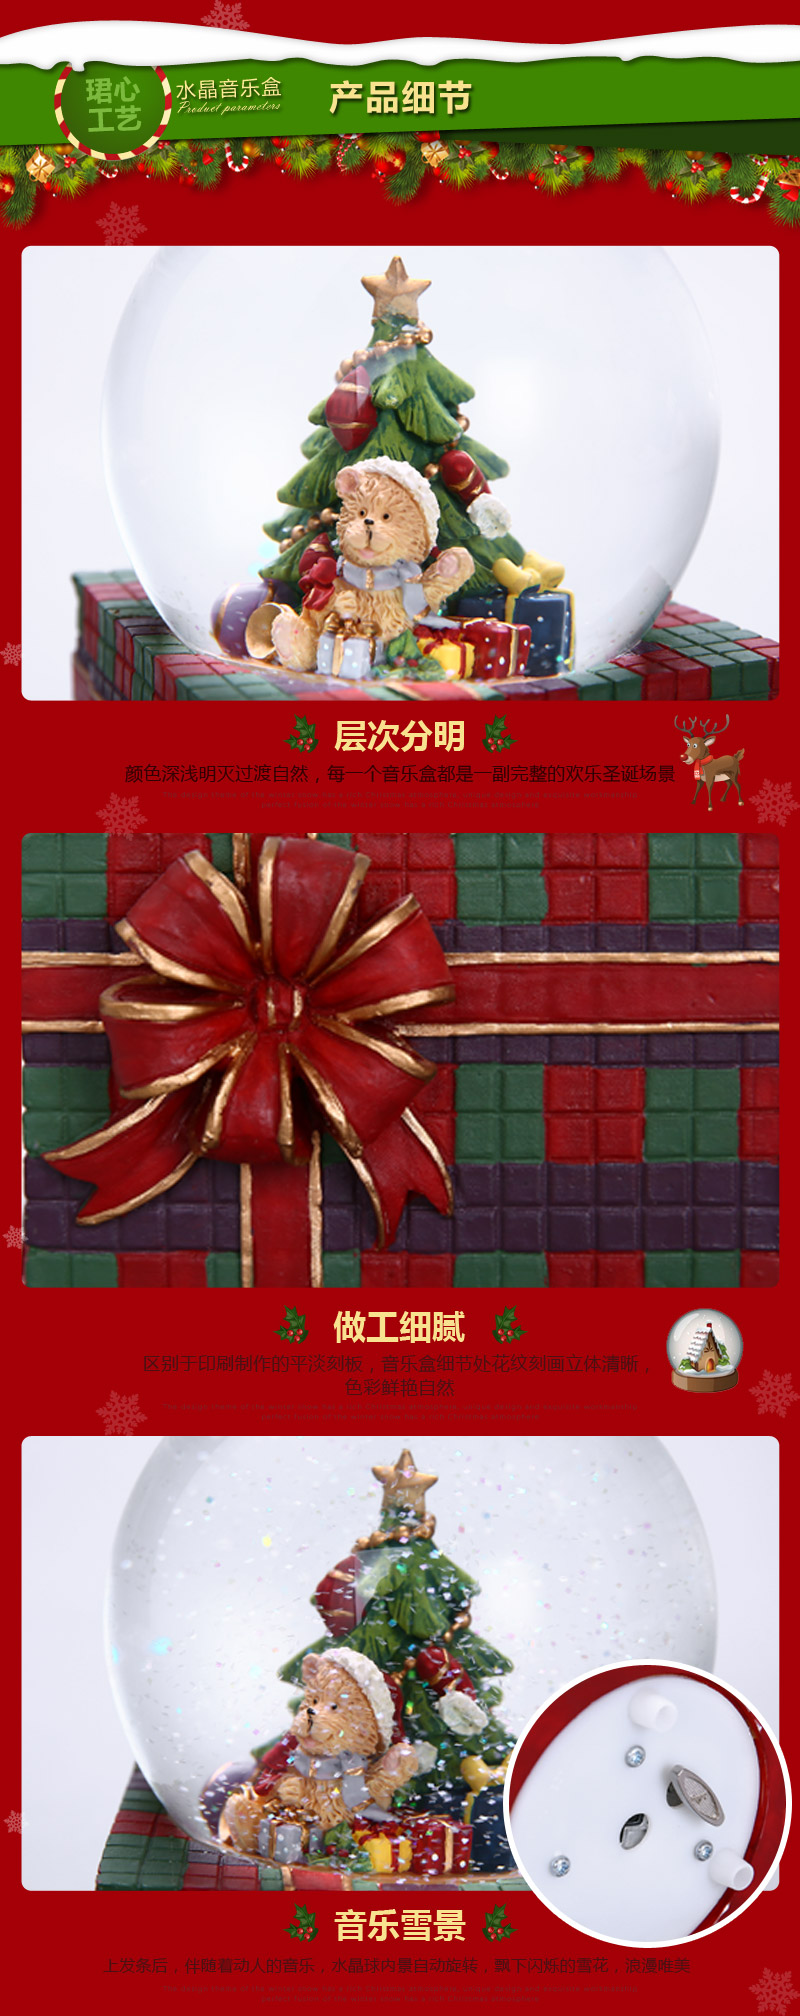 Bear Christmas music box resin Creative Music Box Christmas gift birthday gift exclusive custom (seven days) MG-5003 resin decoration4